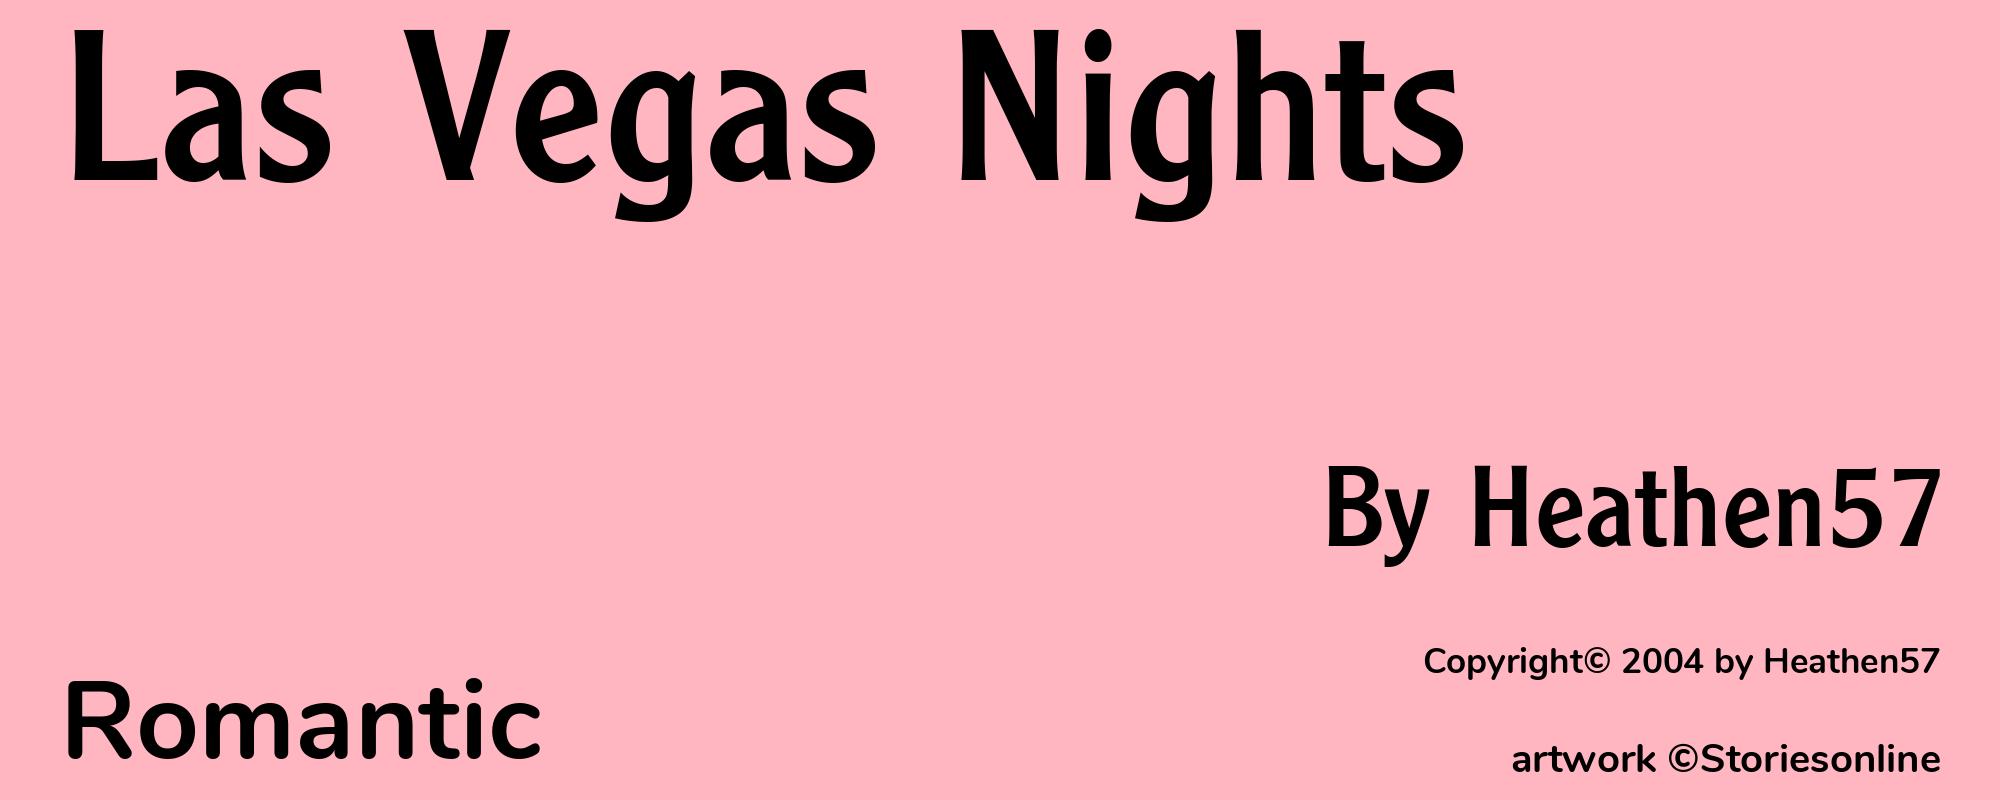 Las Vegas Nights - Cover